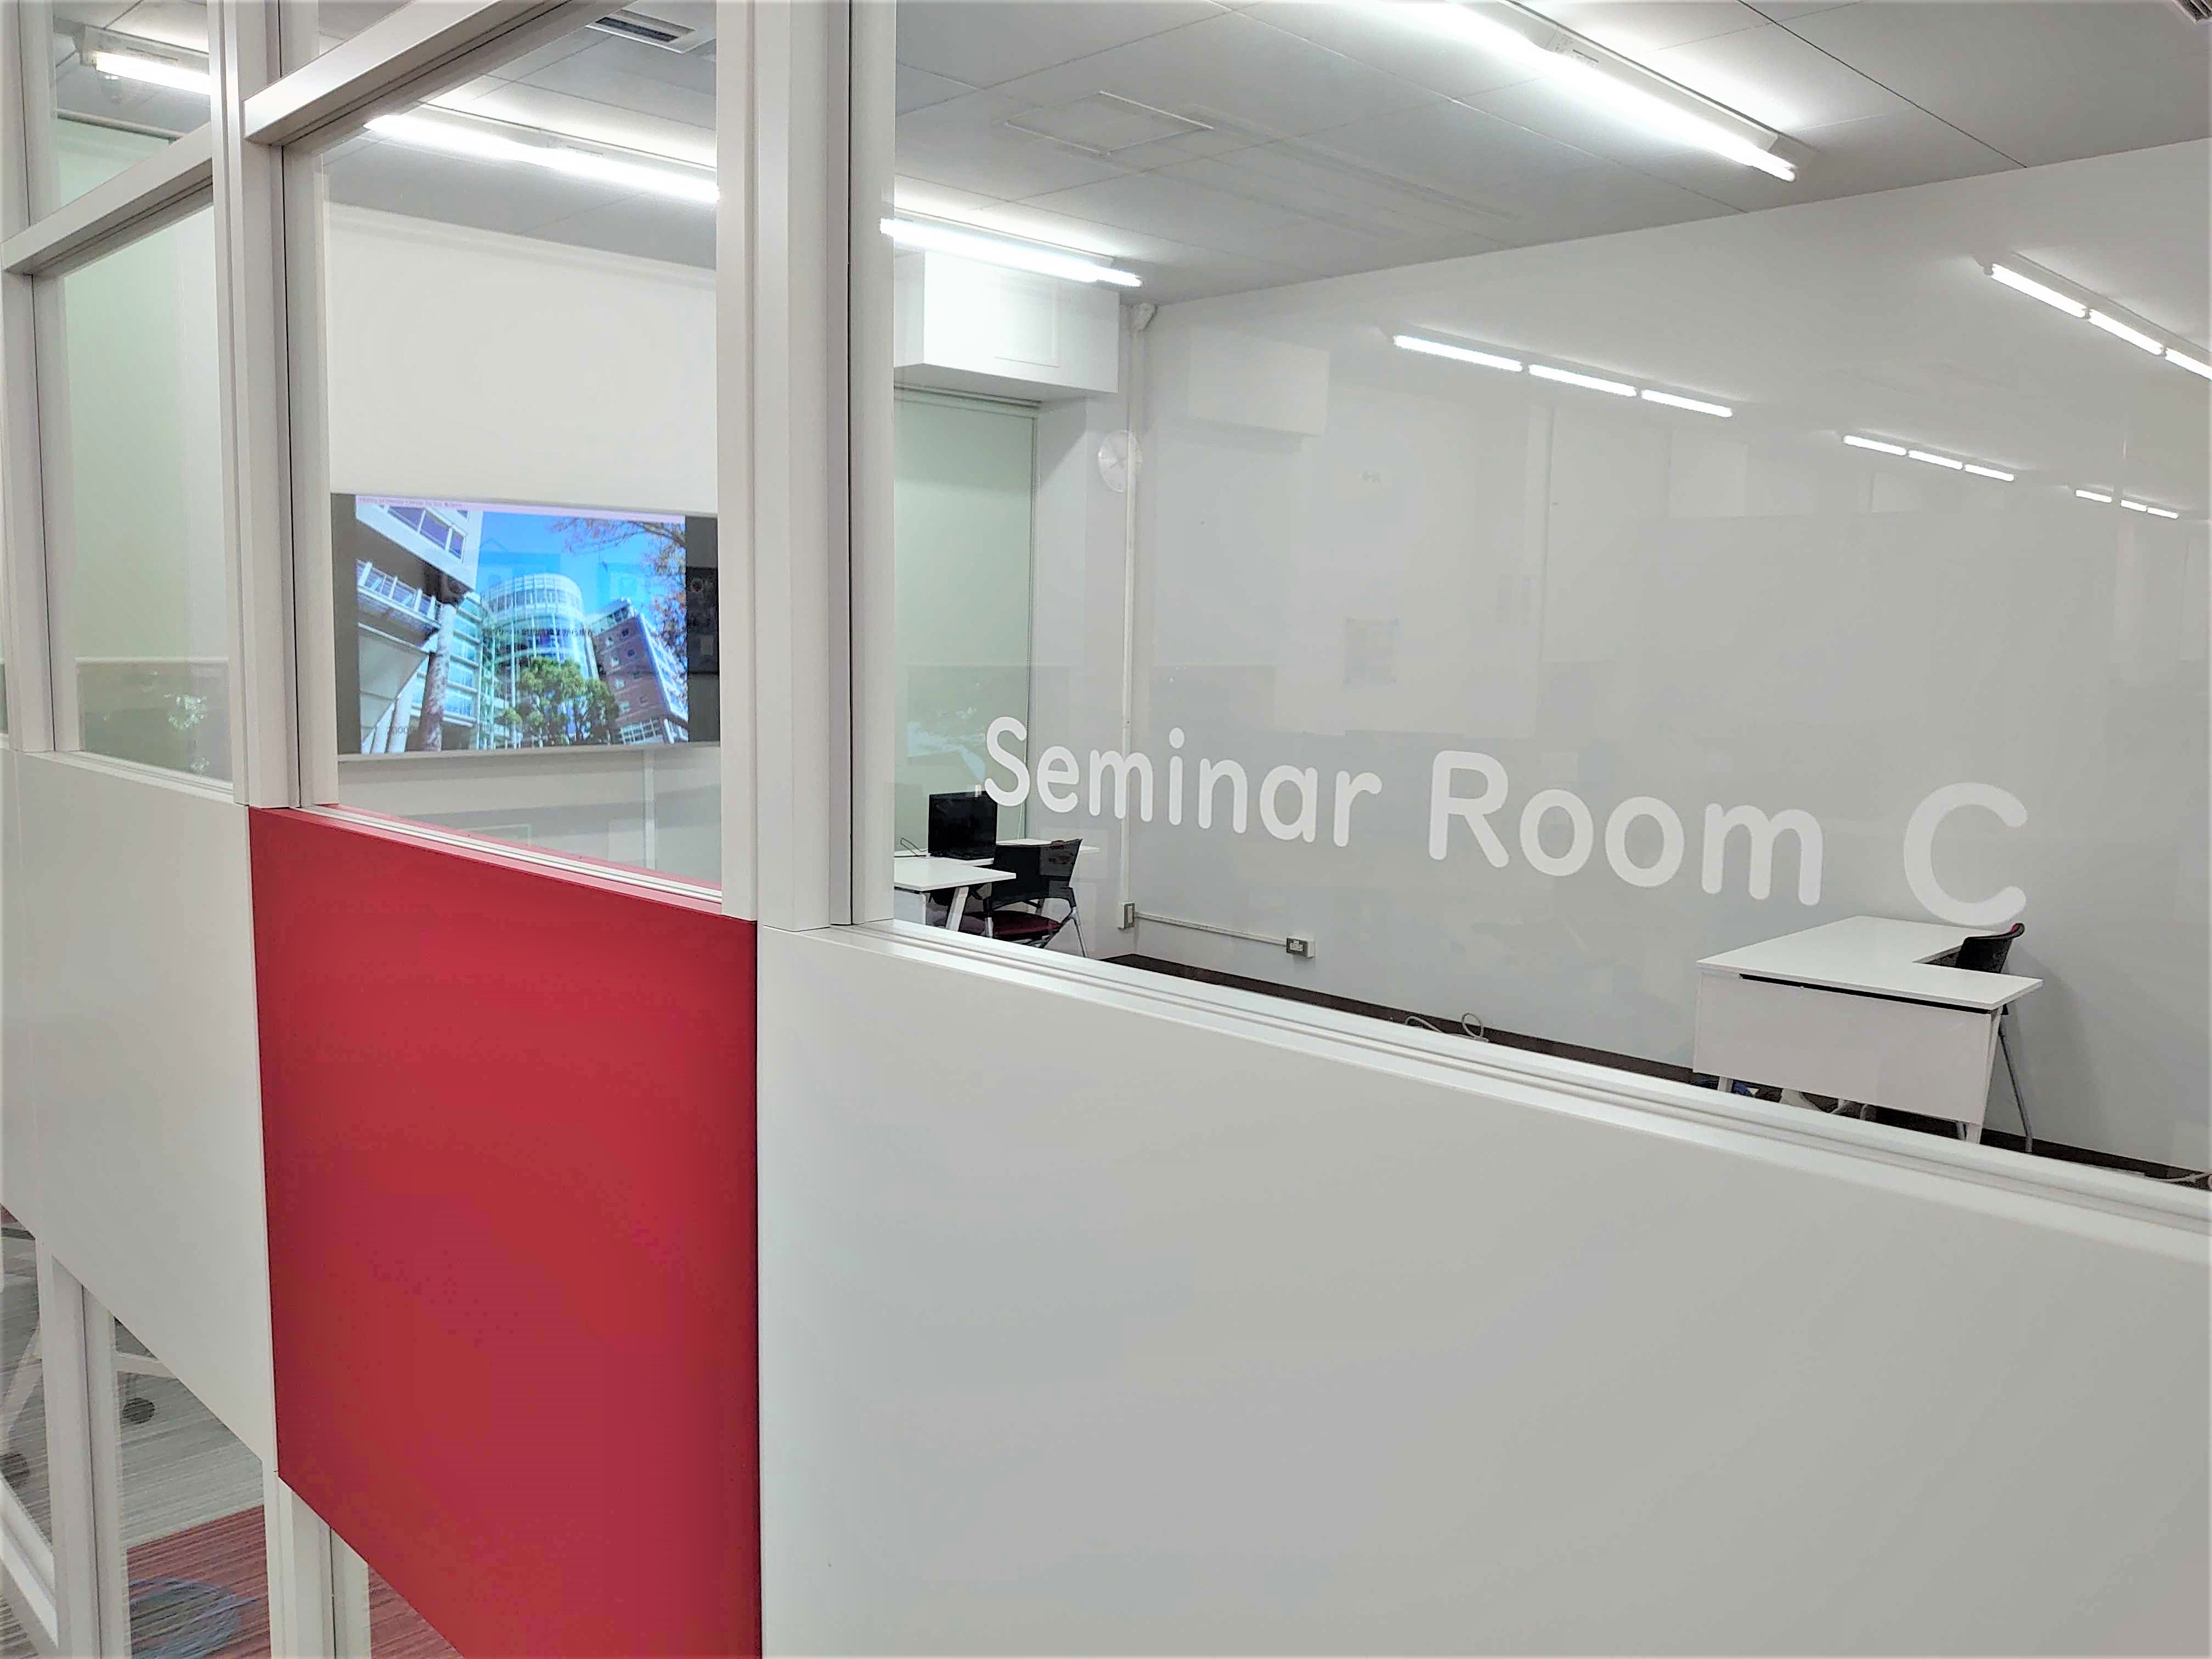 Seminar Room C